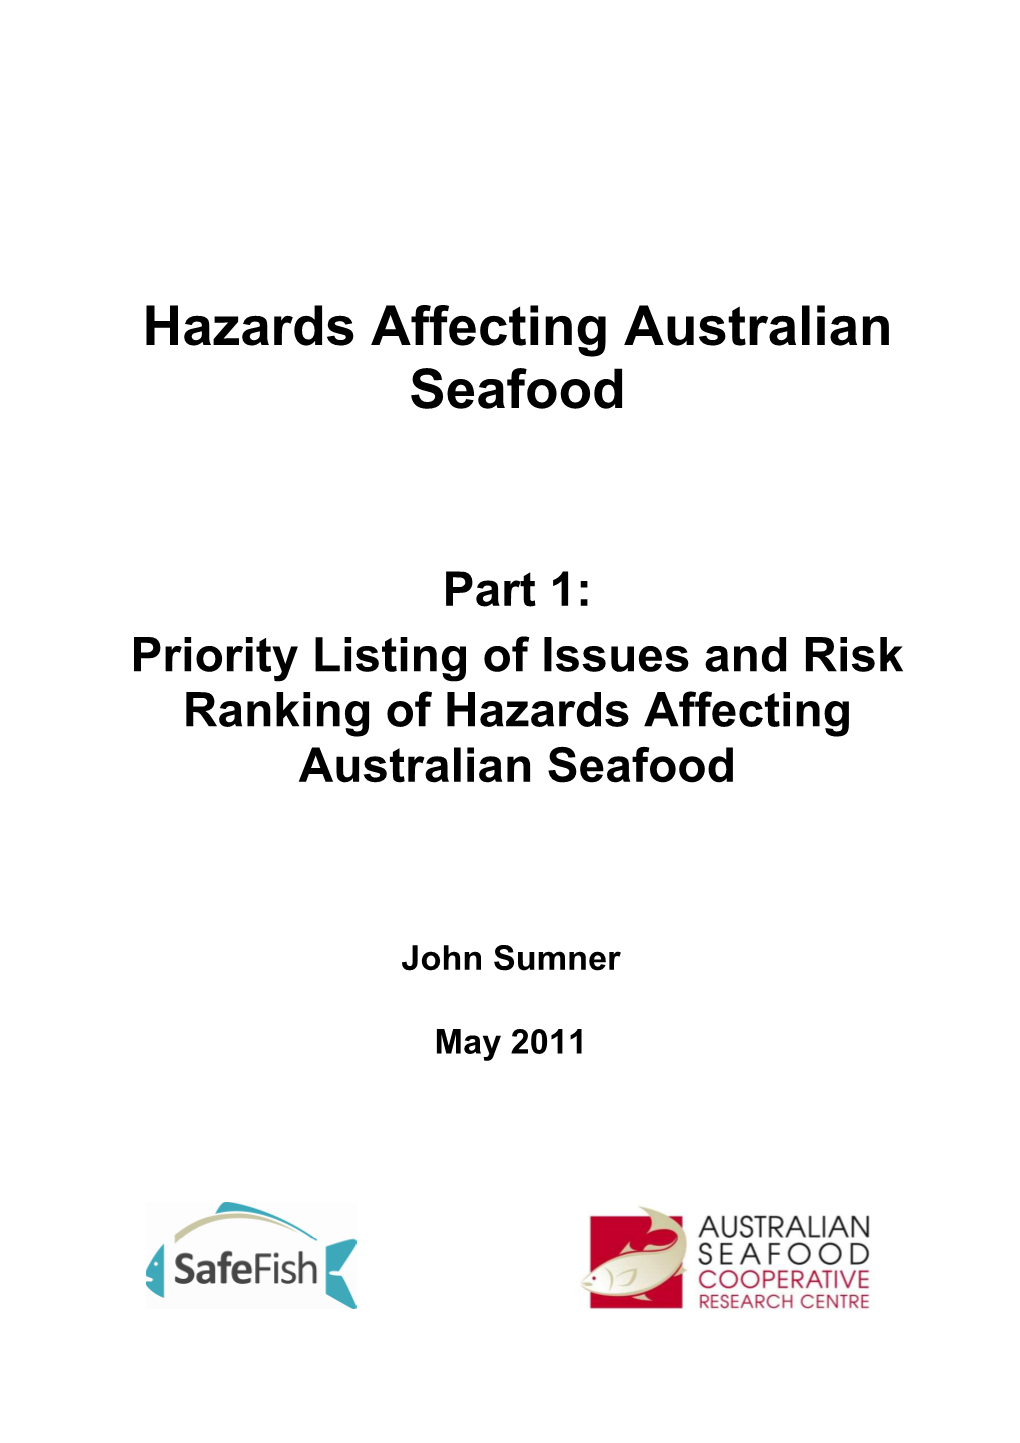 Hazards Affecting Australian Seafood